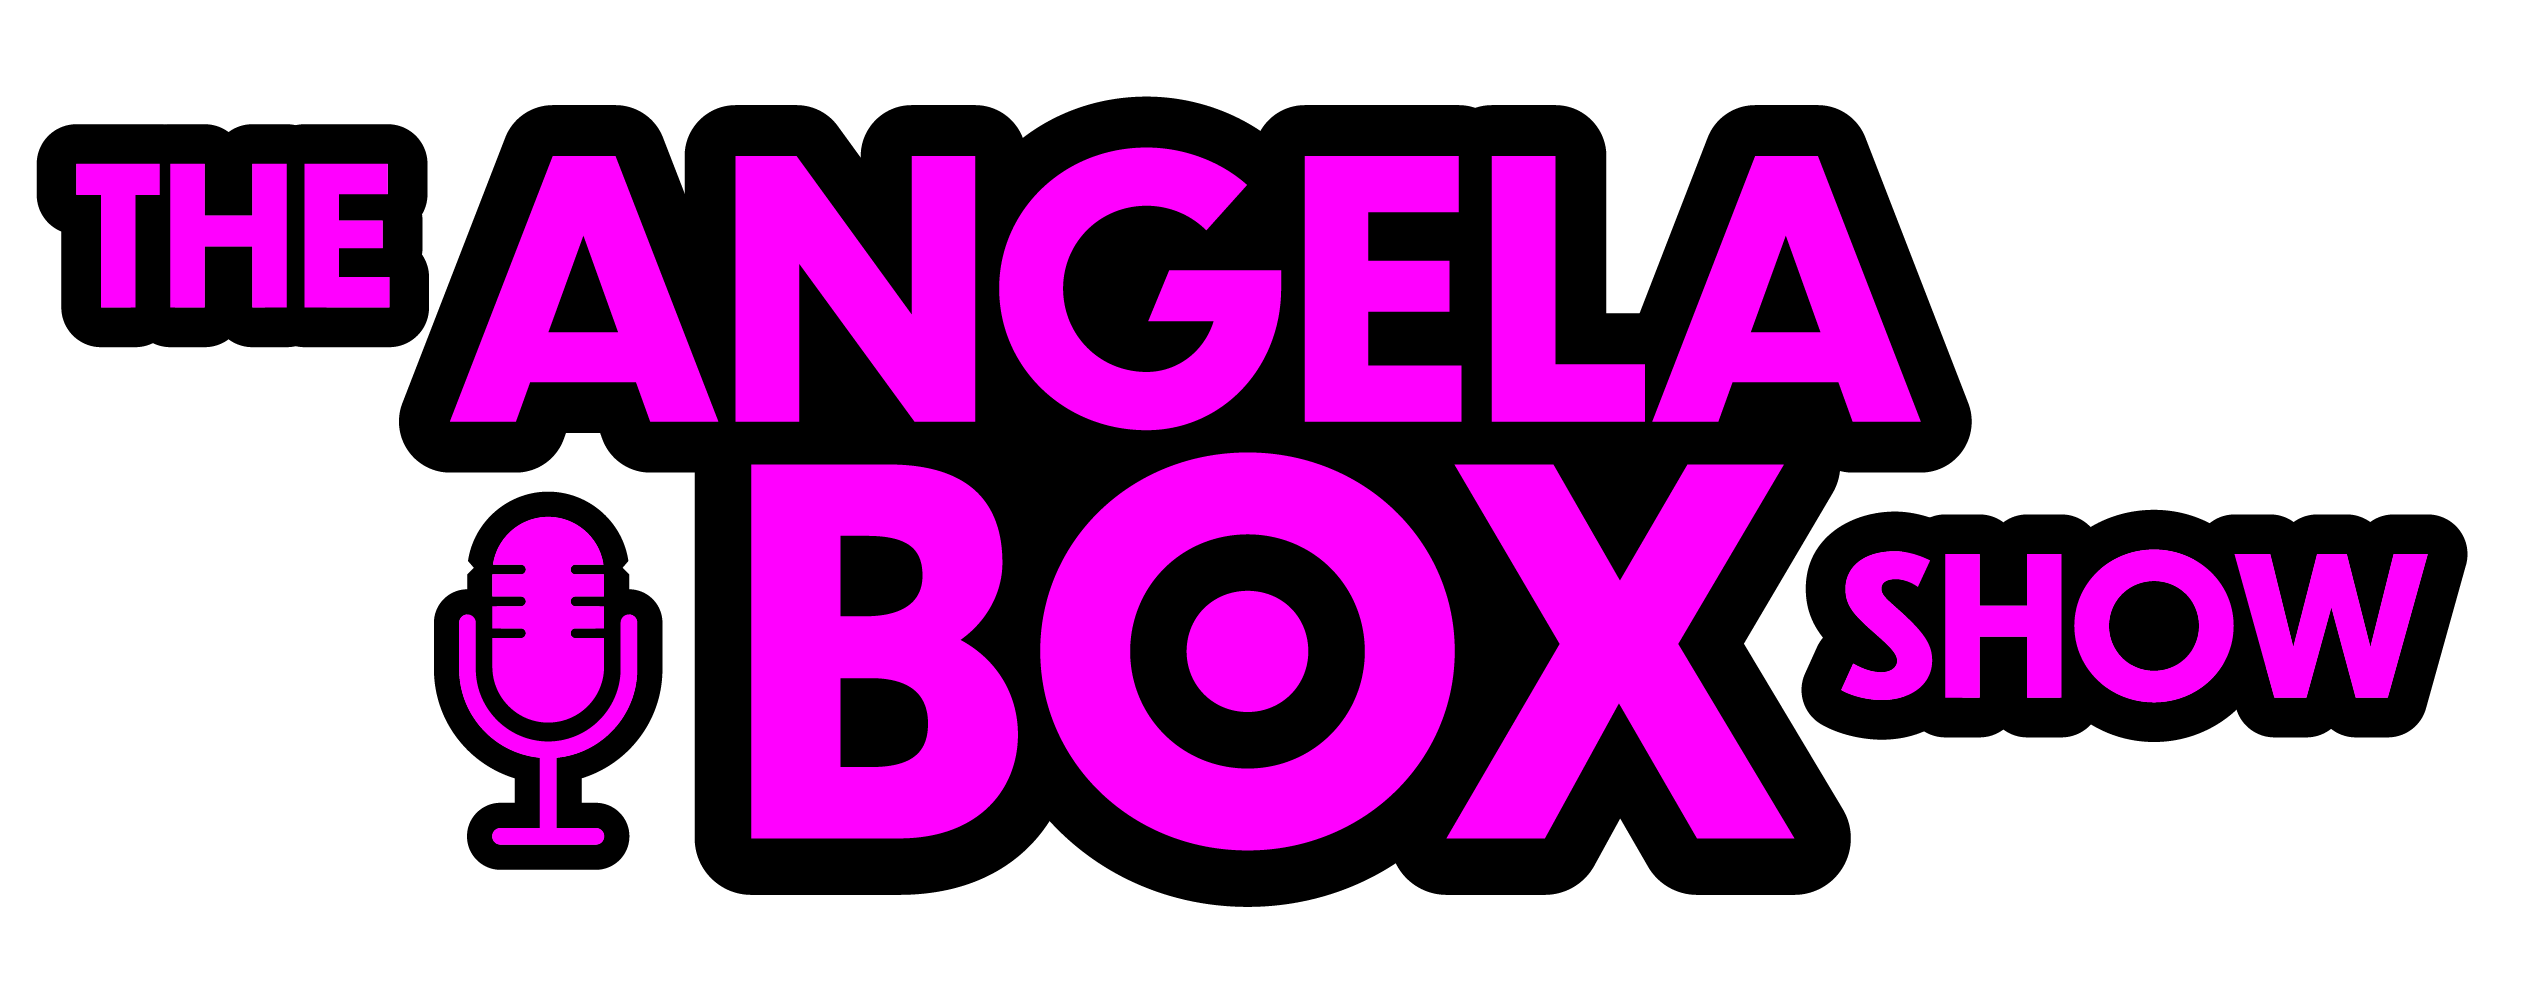 The Angela Box Show